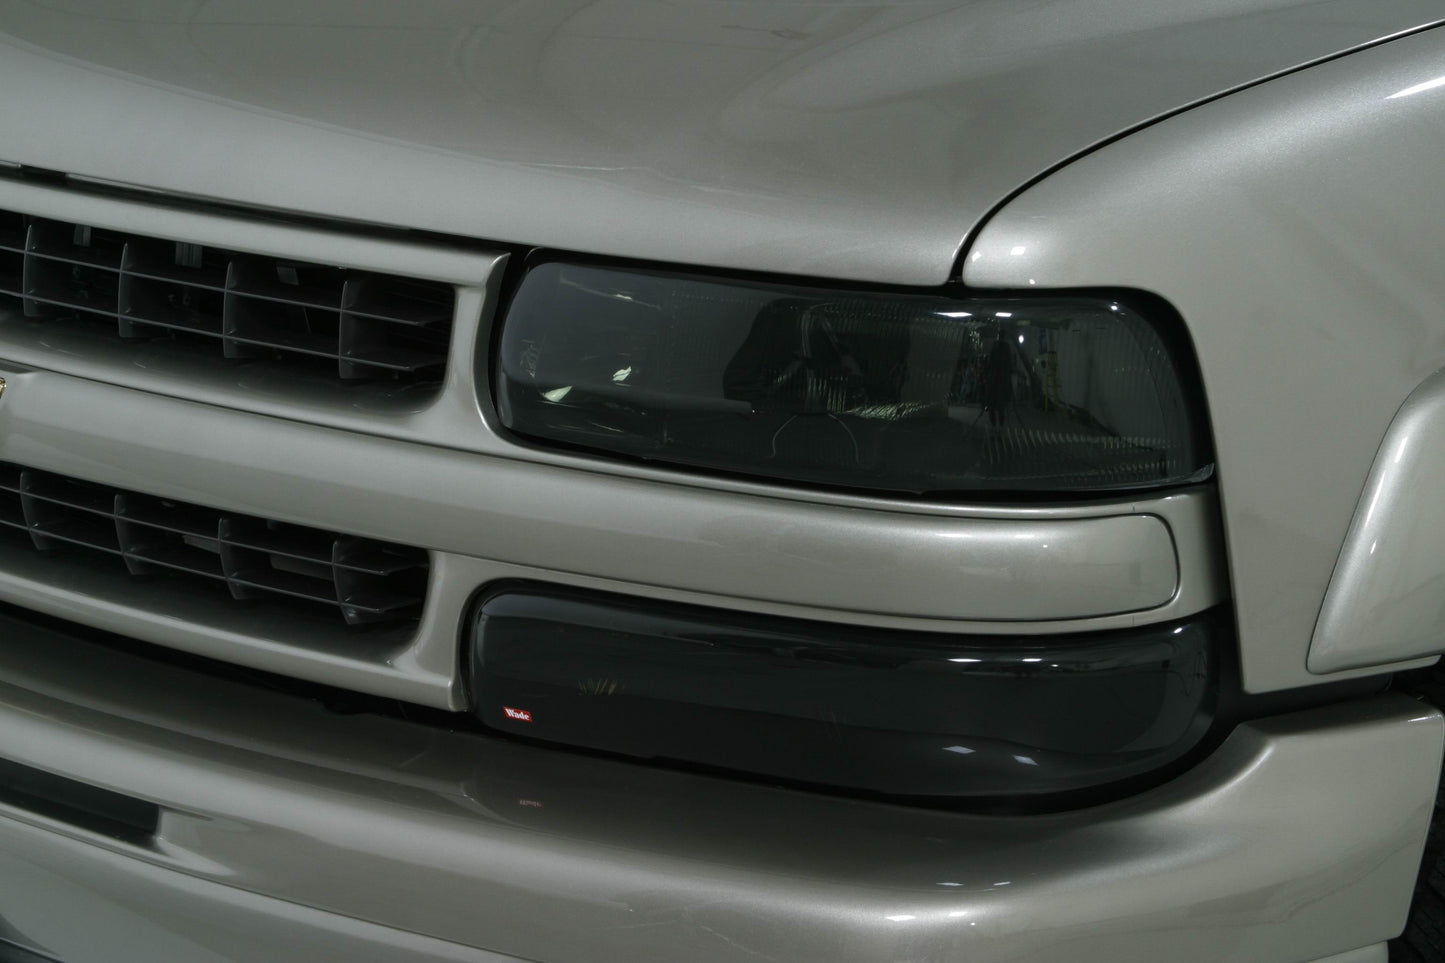 1996 Toyota Paseo Head Light Covers